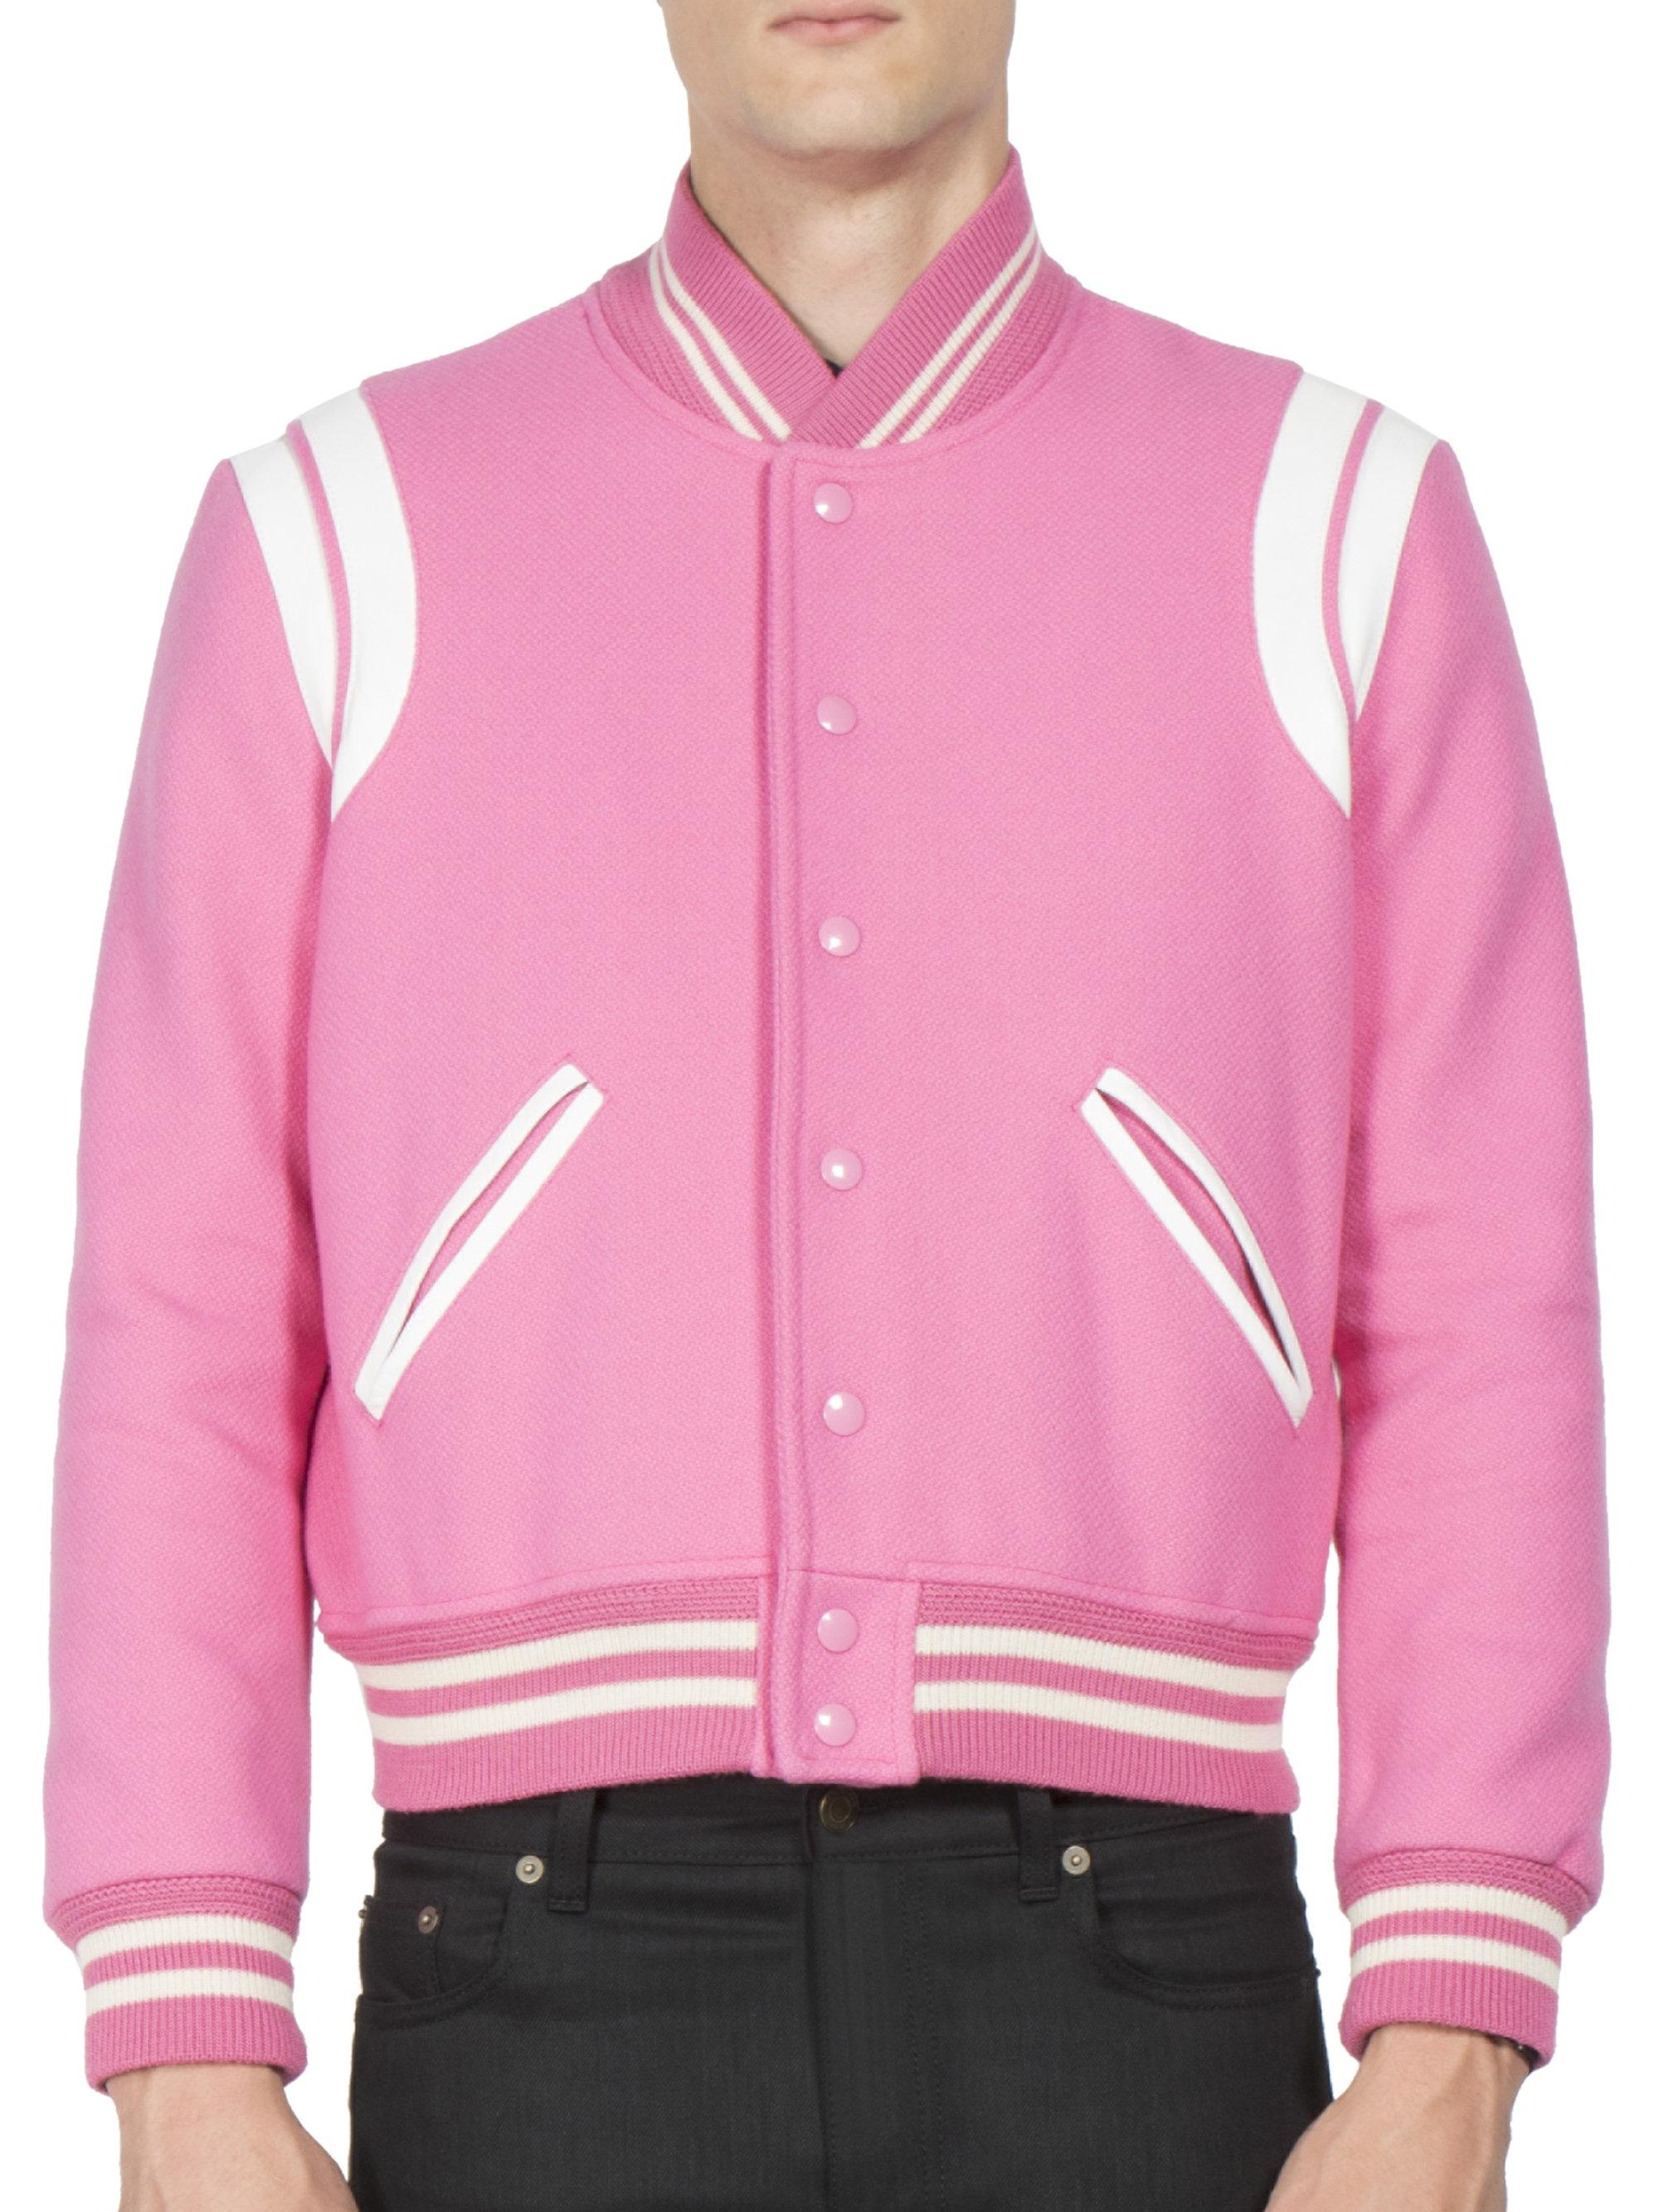 Lyst - Saint Laurent Teddy Wool Blend Jacket in Pink for Men